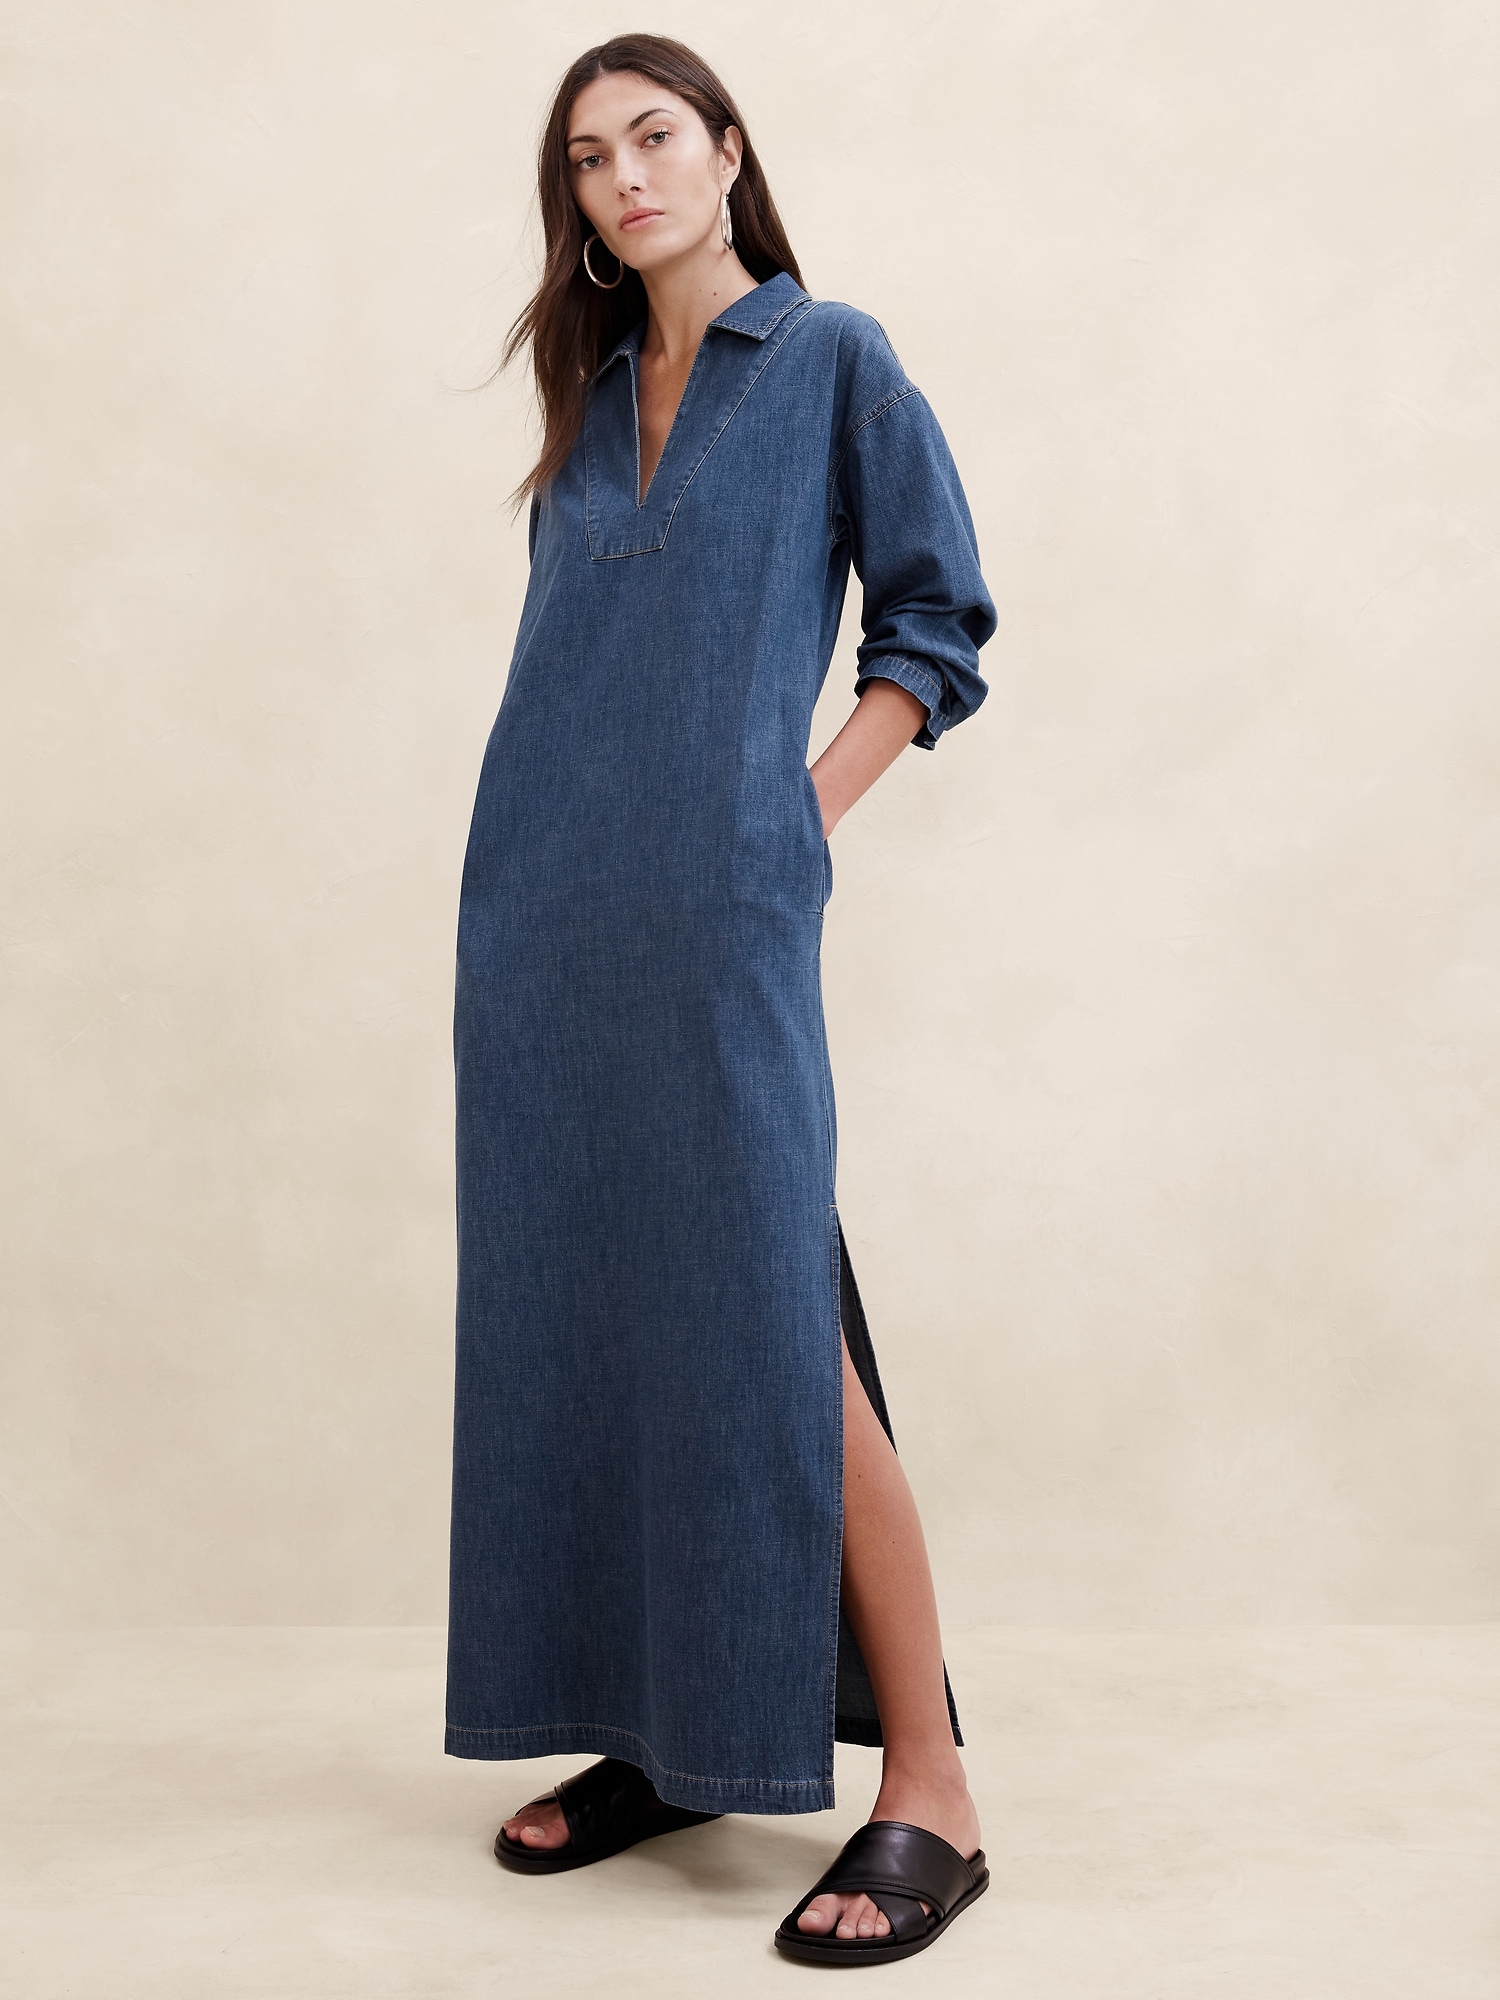 SBYOJLPB Summer Dresses for Women Women Casual Solid Sleeveless Frenulum  Denim Jacket Jean Long Dresses Reduced Price Blue 12(XXL) - Walmart.com